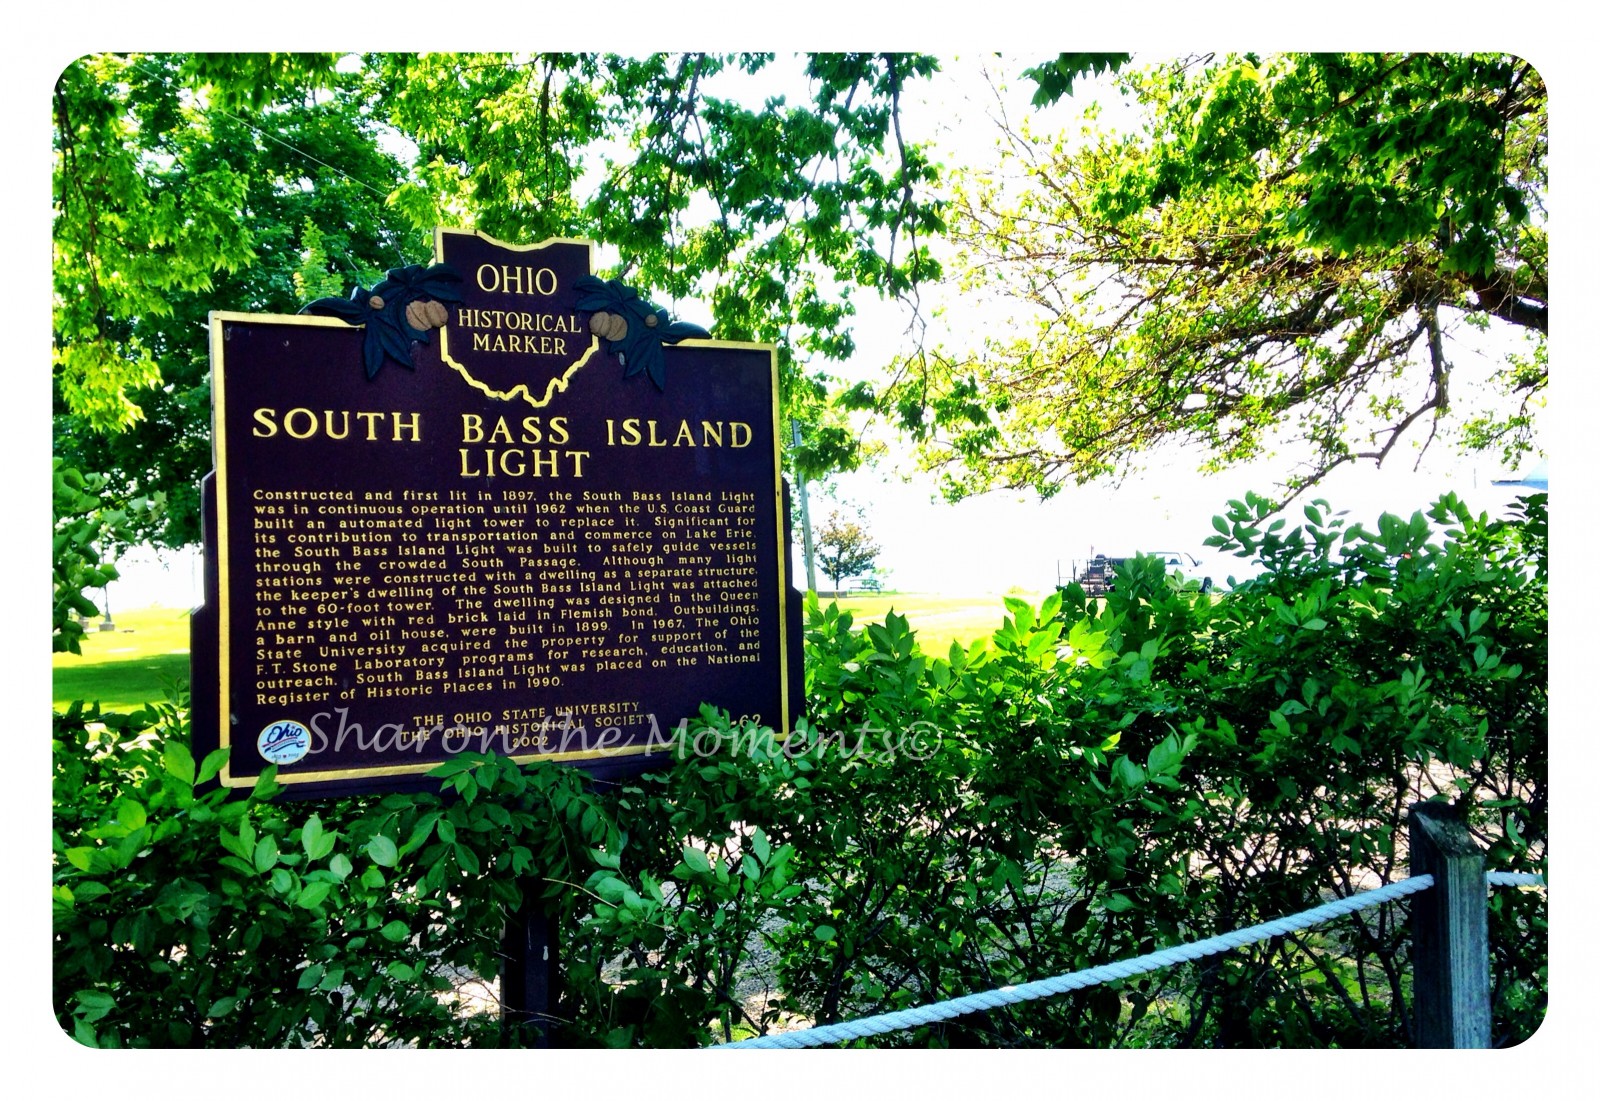 Remarkable Ohio ... Ohio Historical Marker #9-62 South Bass Island Light| Sharon the Moments Blog